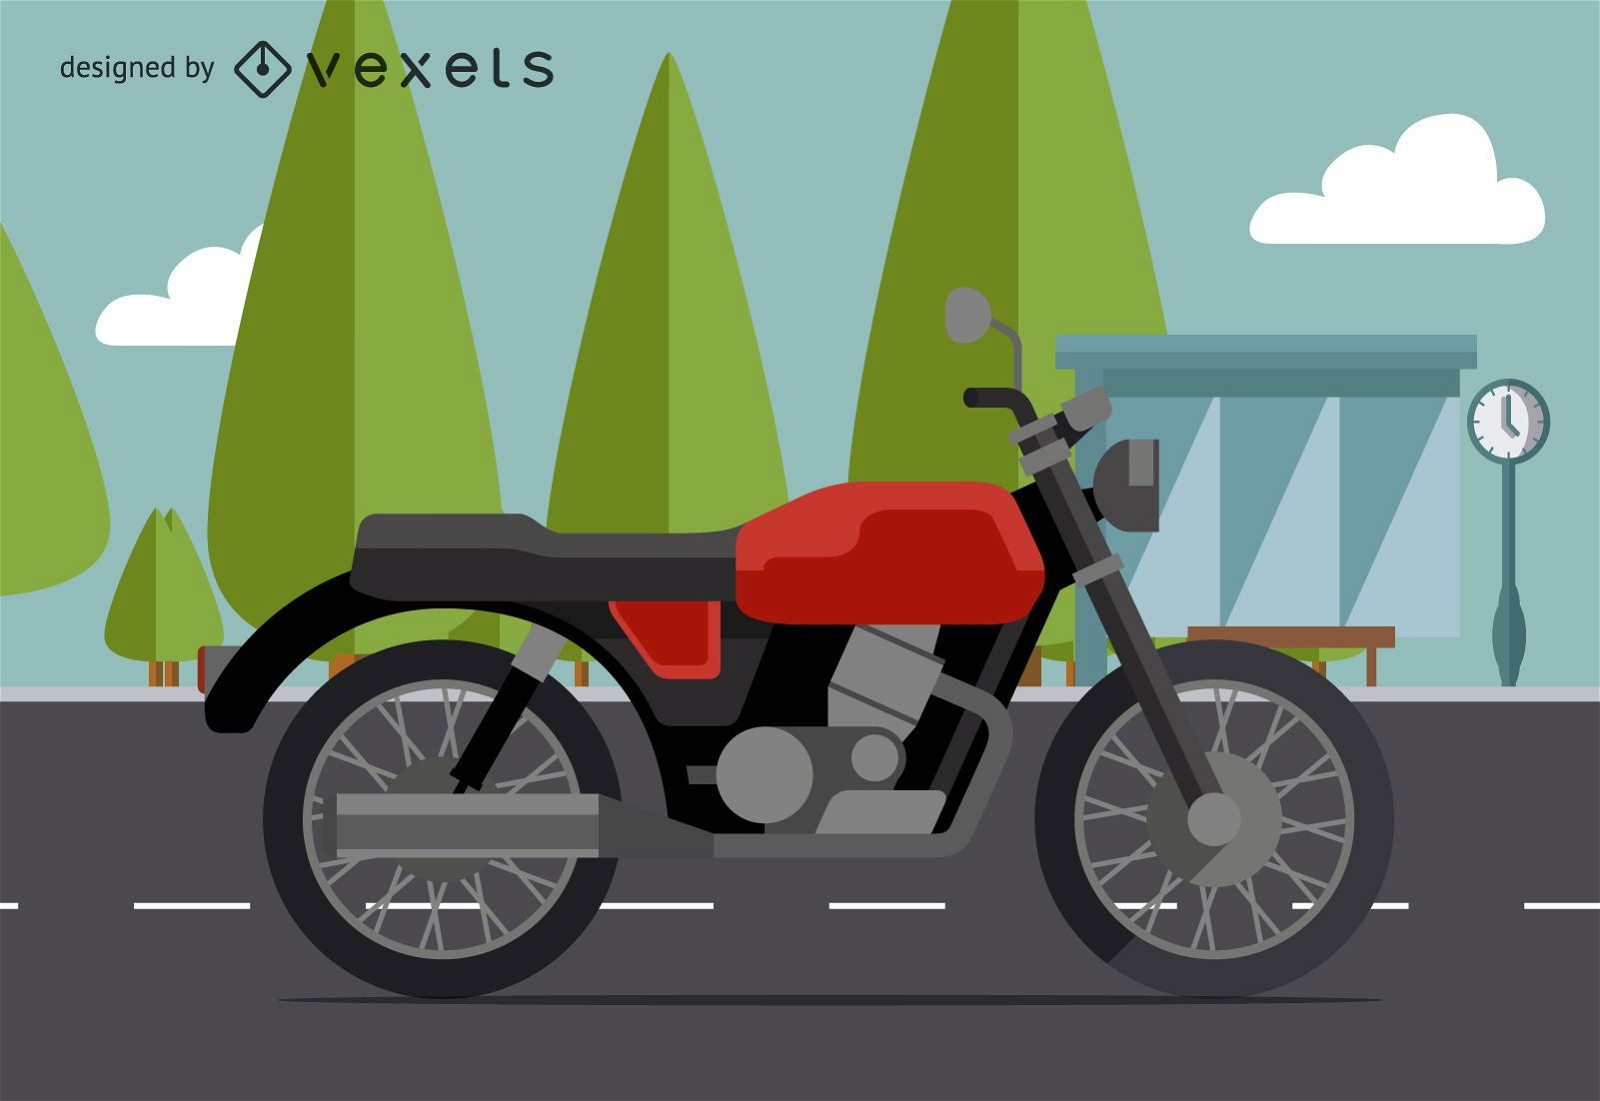 Motorbike illustration